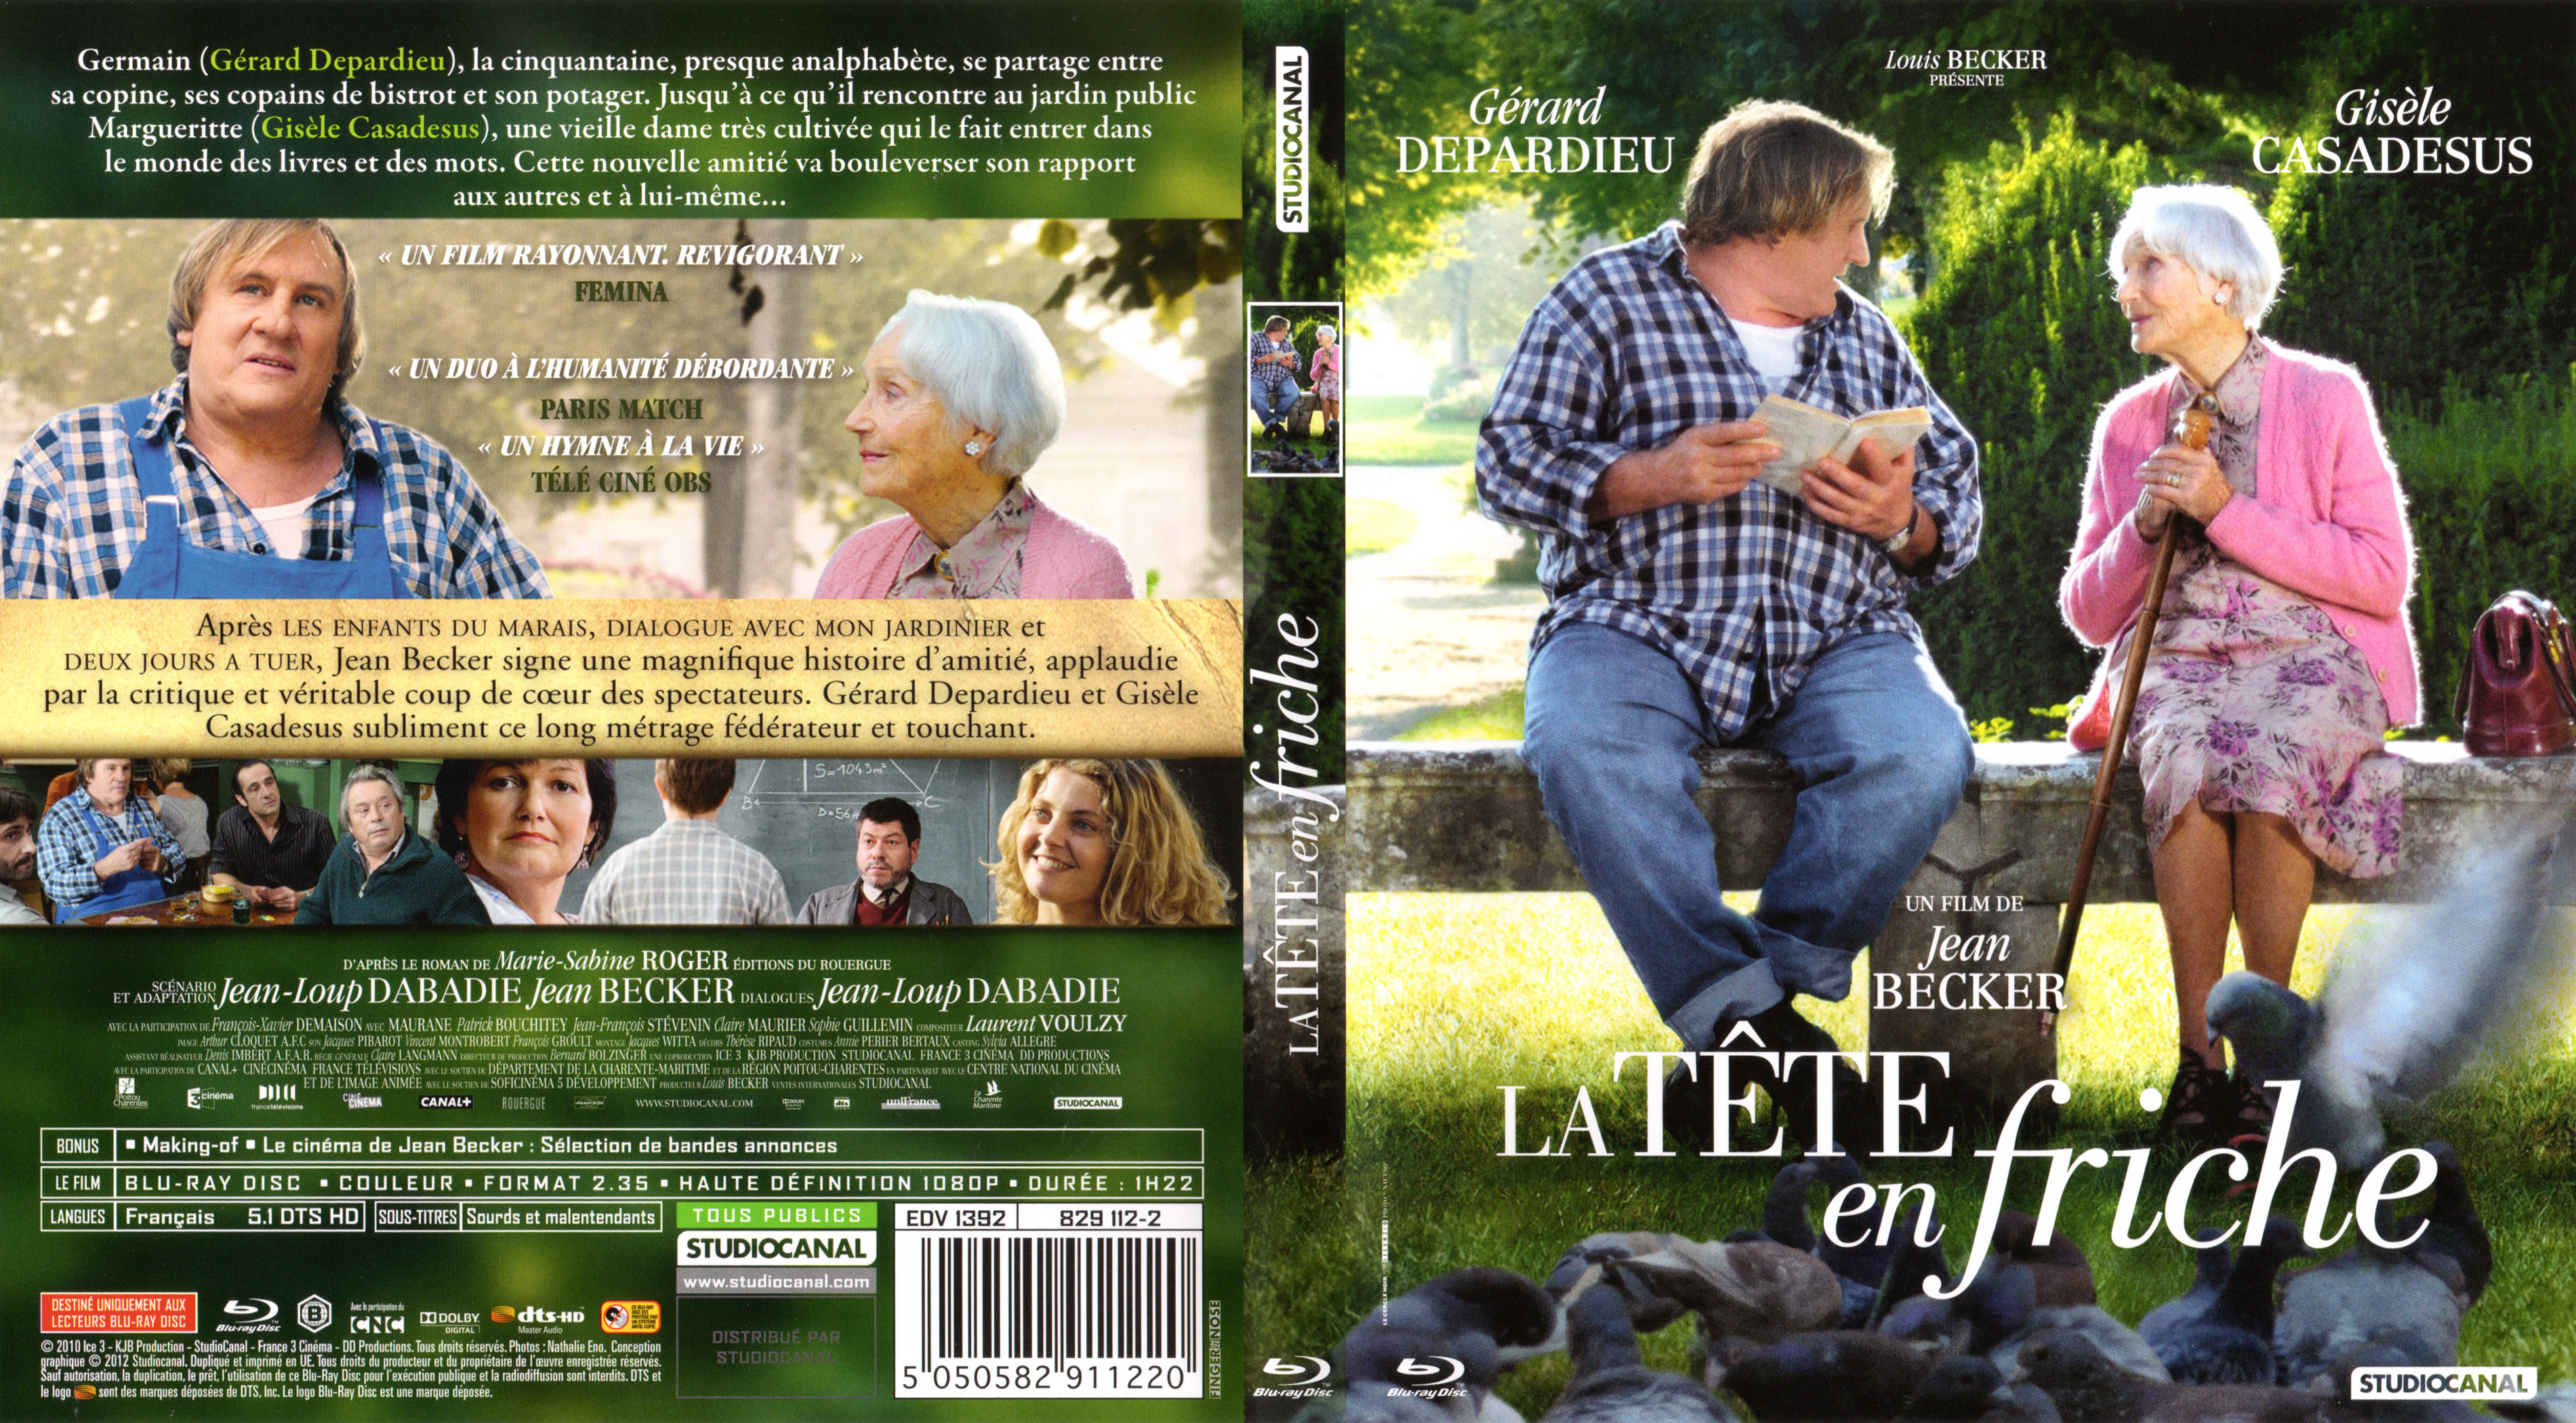 Jaquette DVD La tete en friche (BLU-RAY)